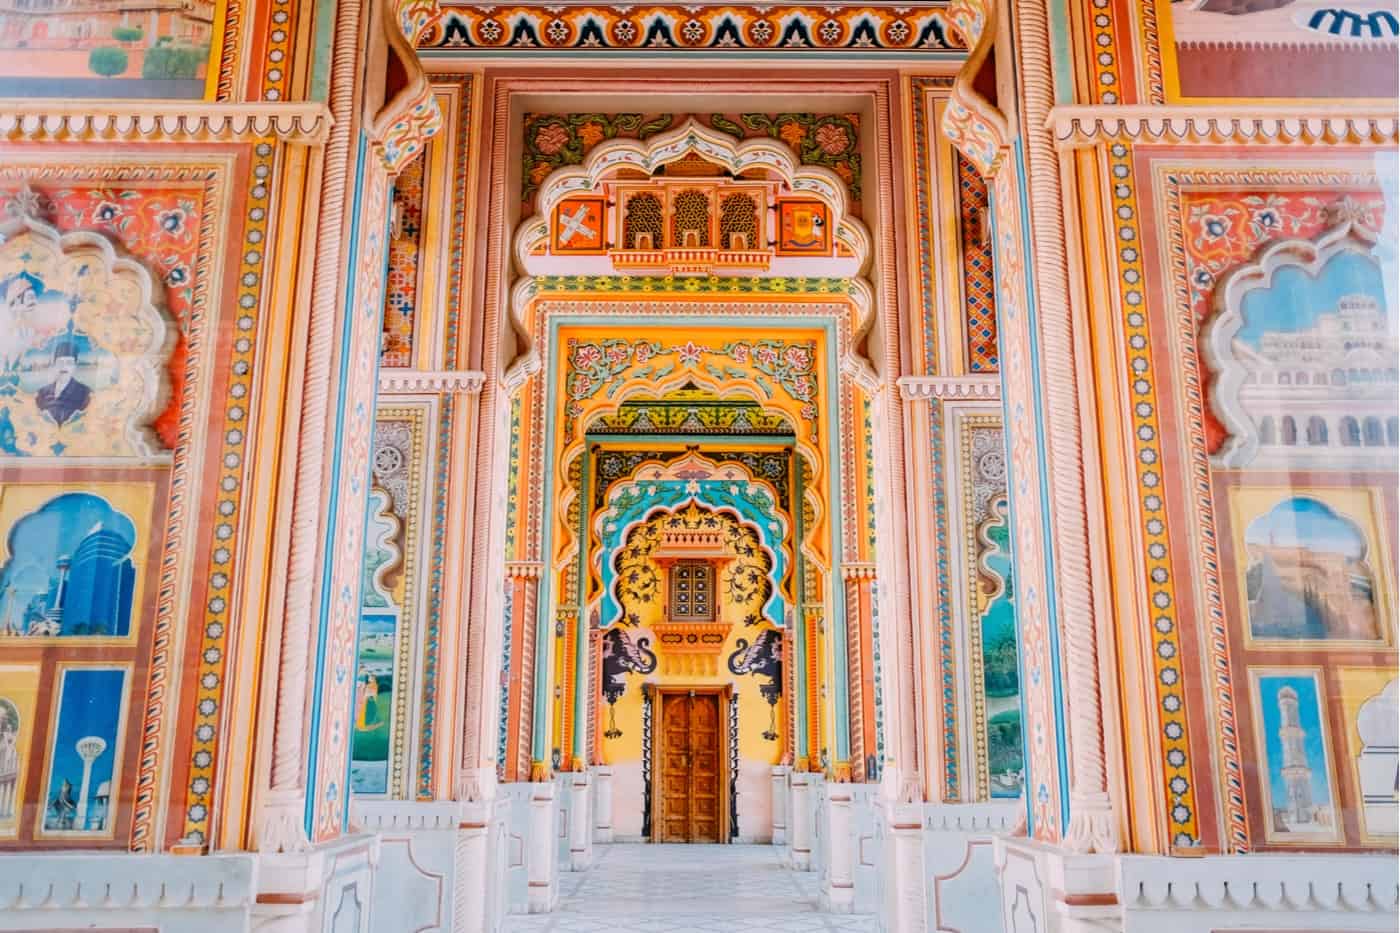 Archway in Jaipur